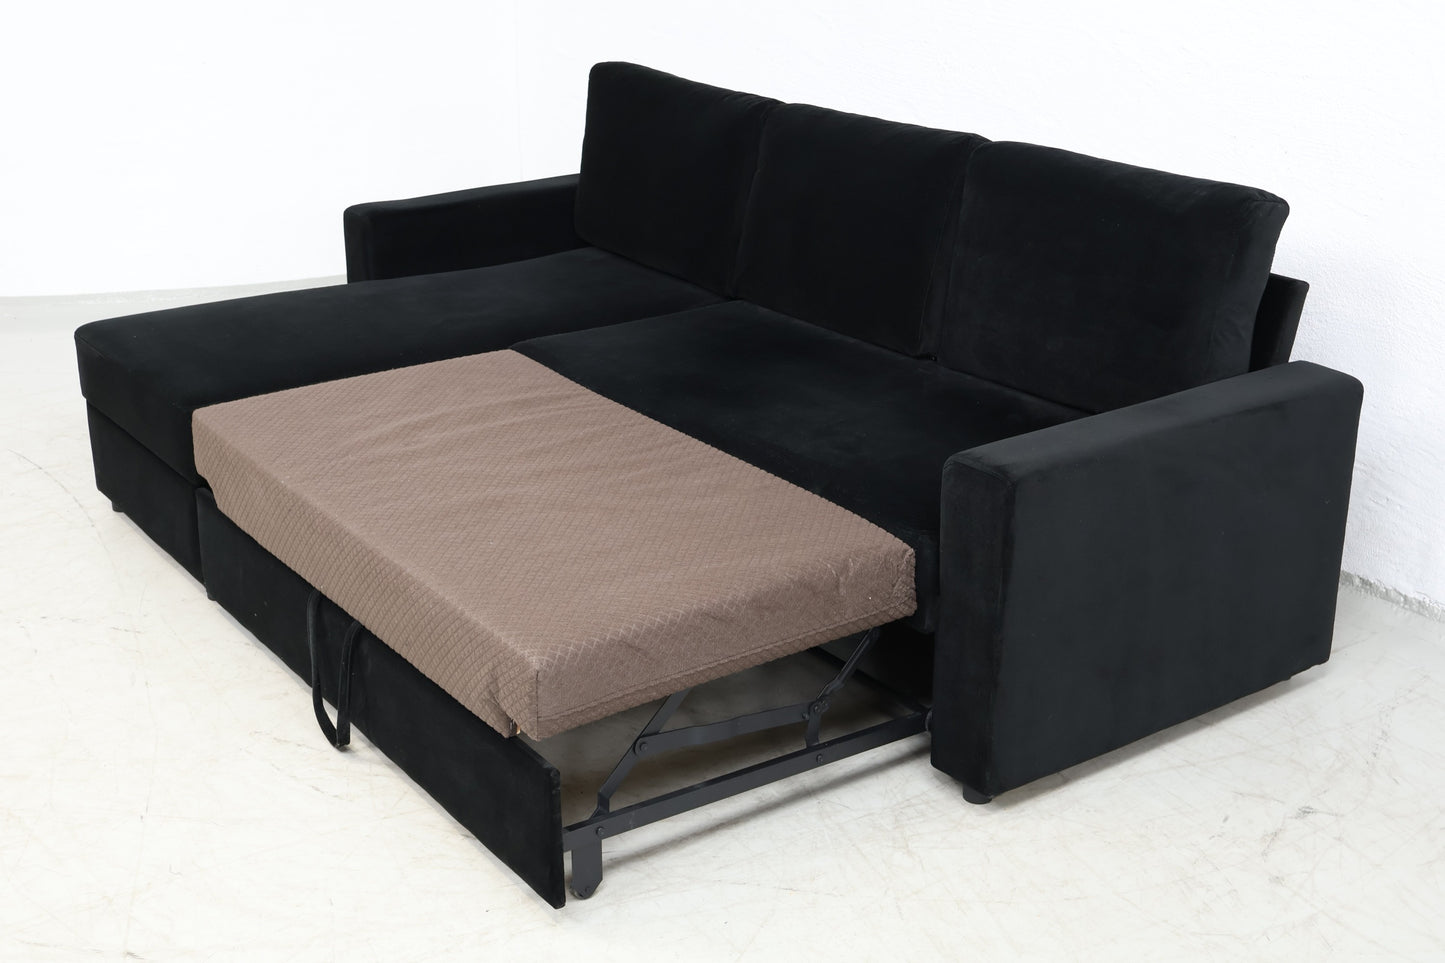 Nyrenset | Vendbar velur sovesofa fra A-Møbler